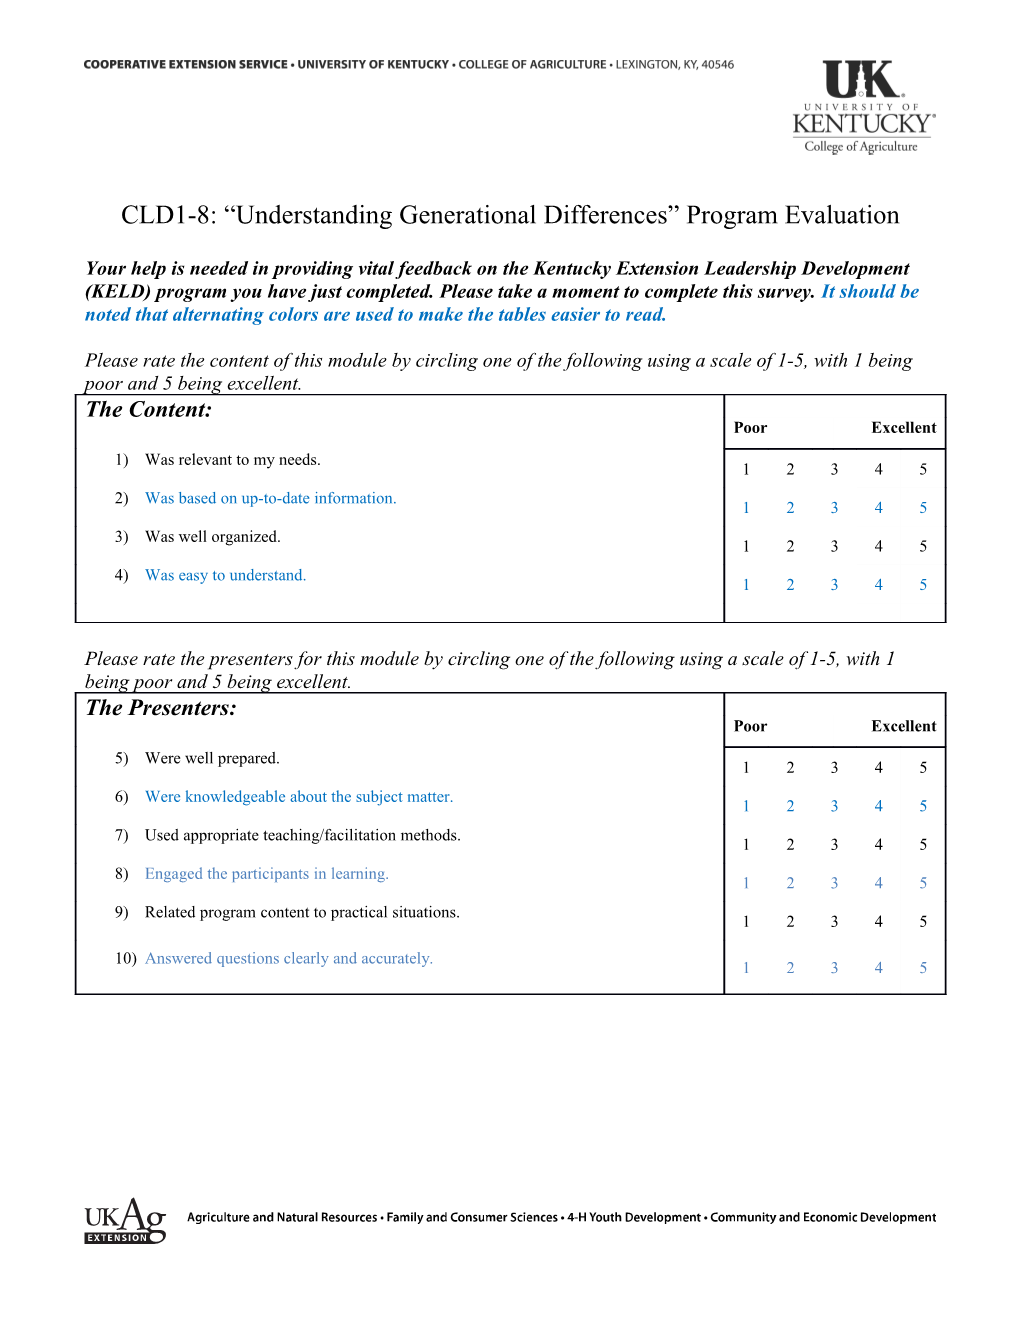 CLD1-8: Understanding Generational Differences Program Evaluation